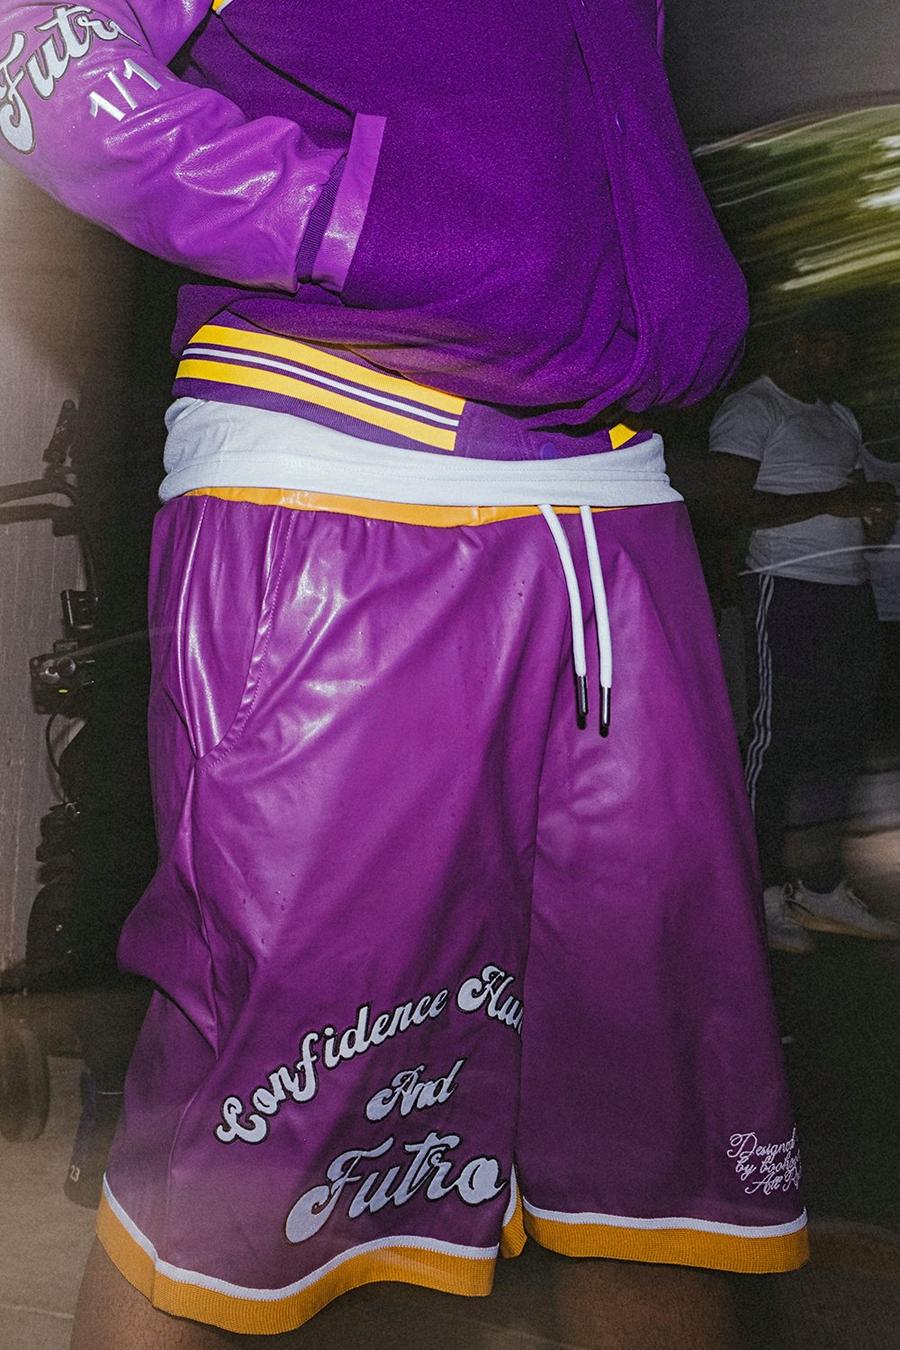 Baseball-Shorts in Wetlook-Optik mit Slogan-Print, Violett purple image number 1